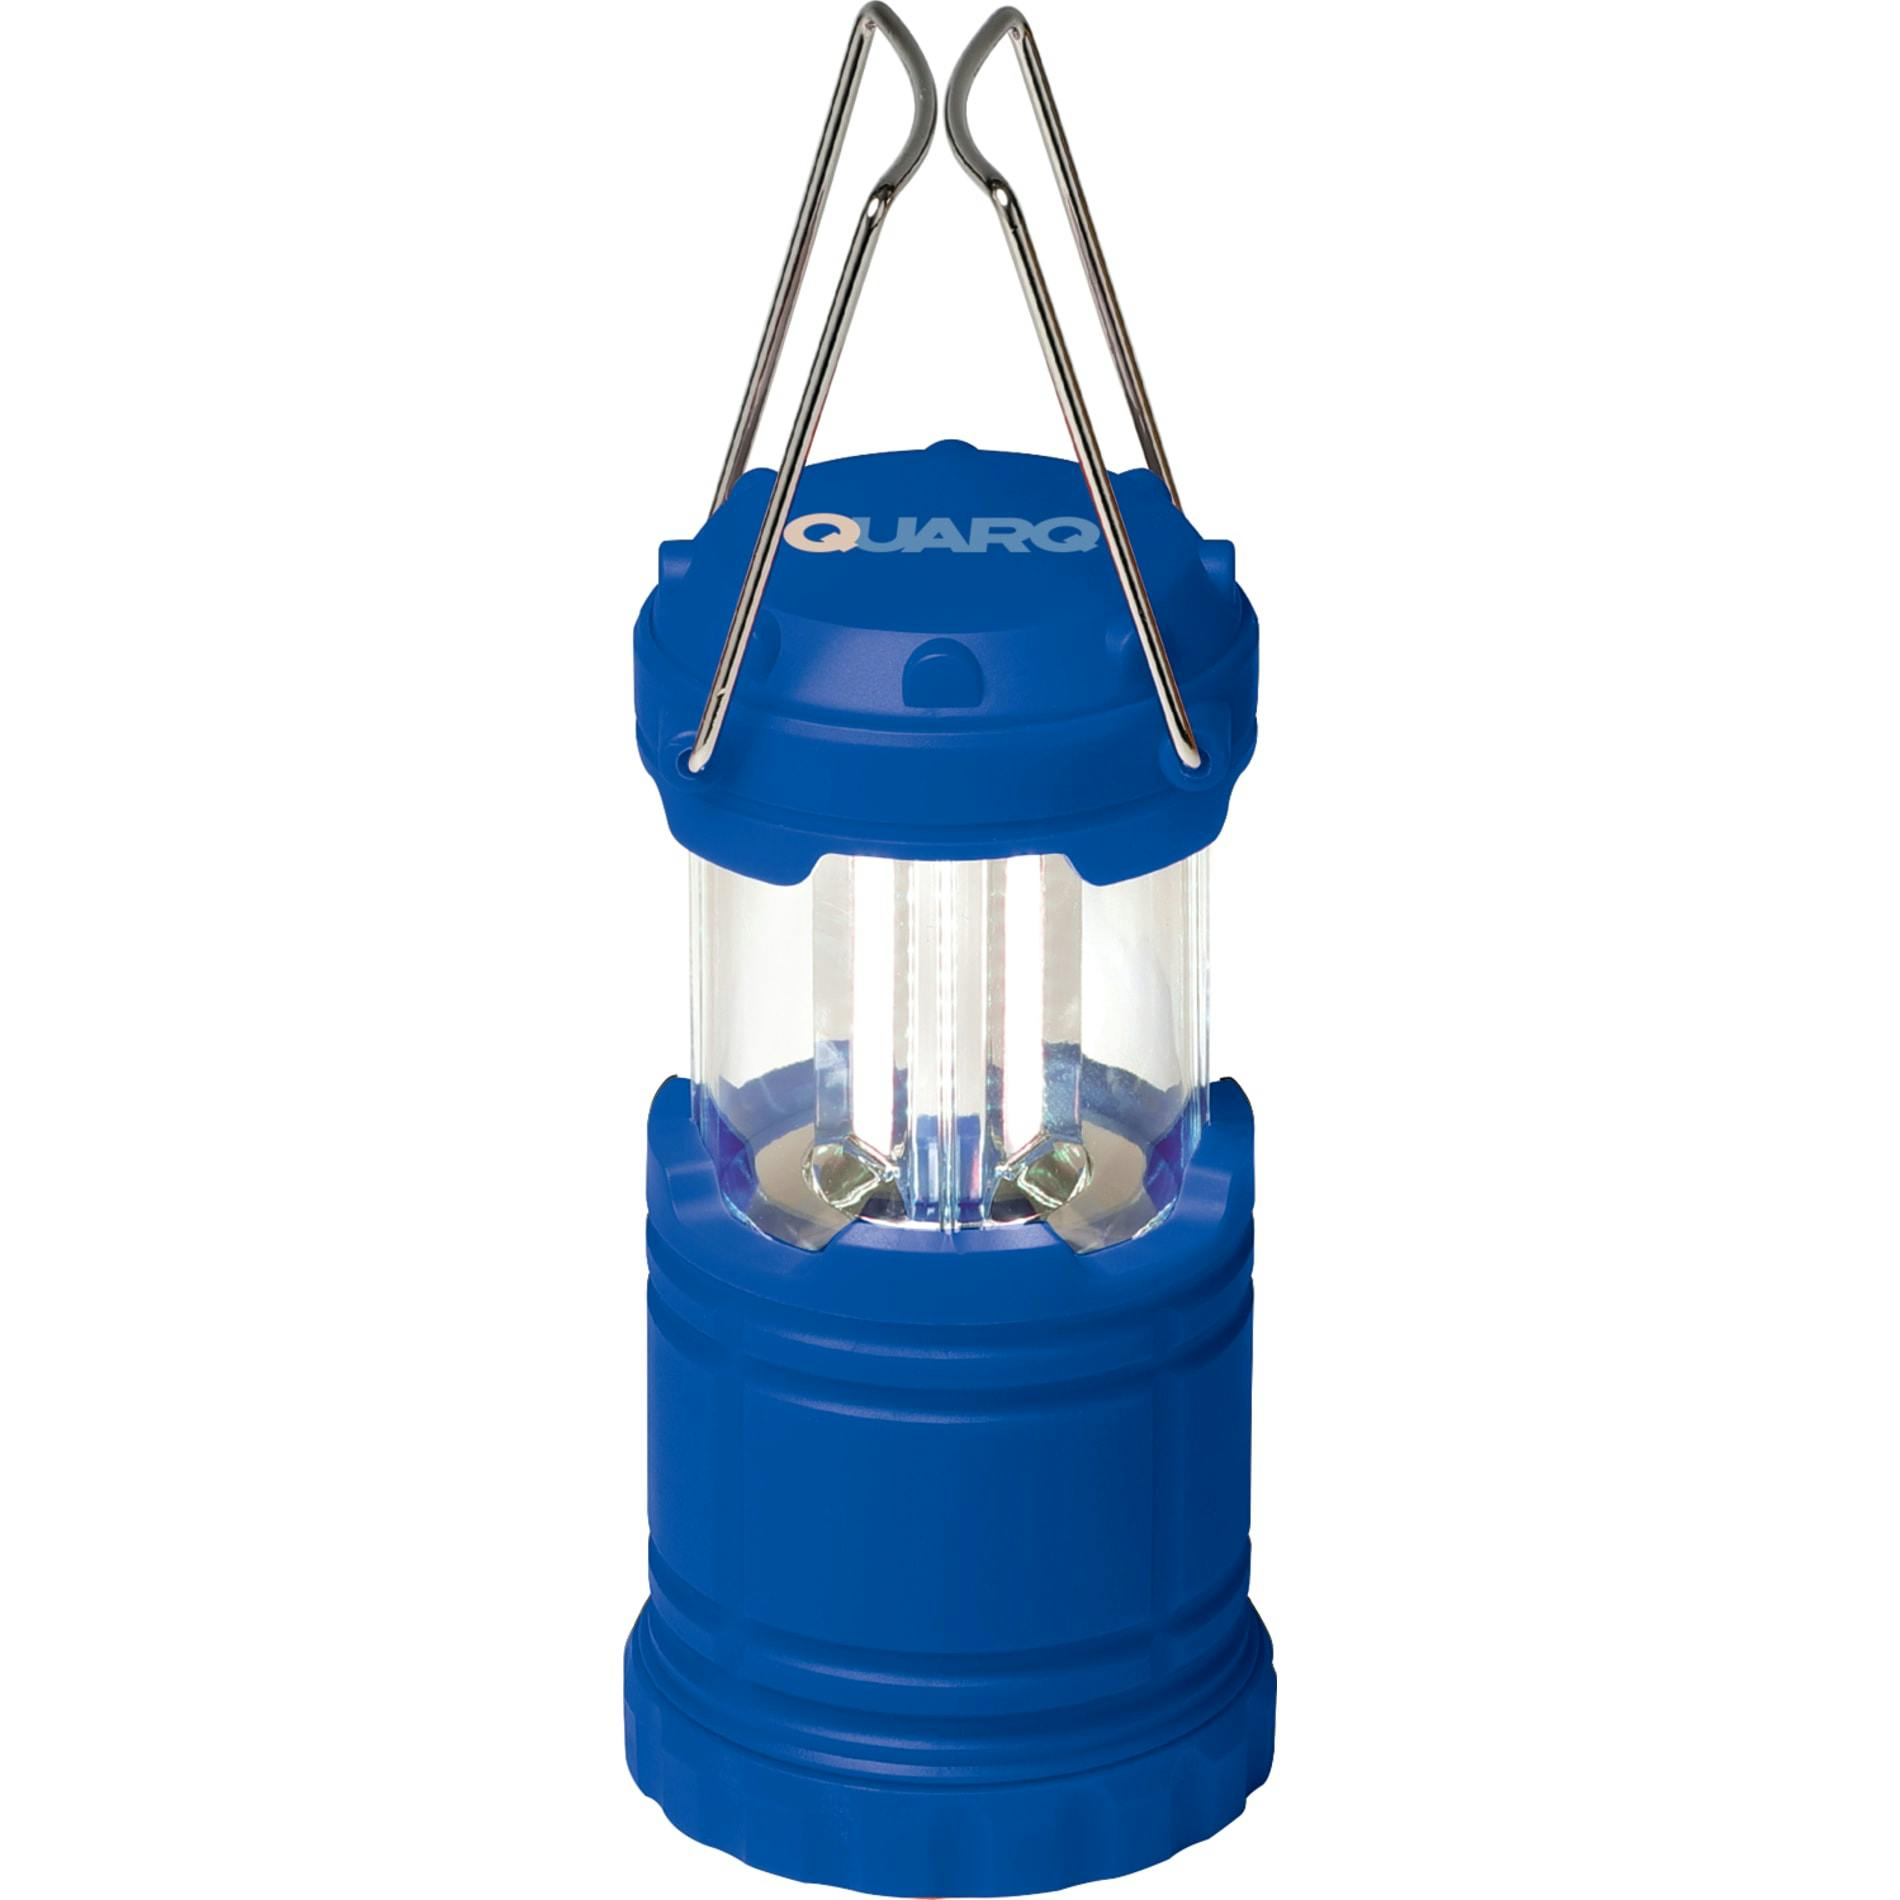 Mini COB Pop Up Lantern - additional Image 1